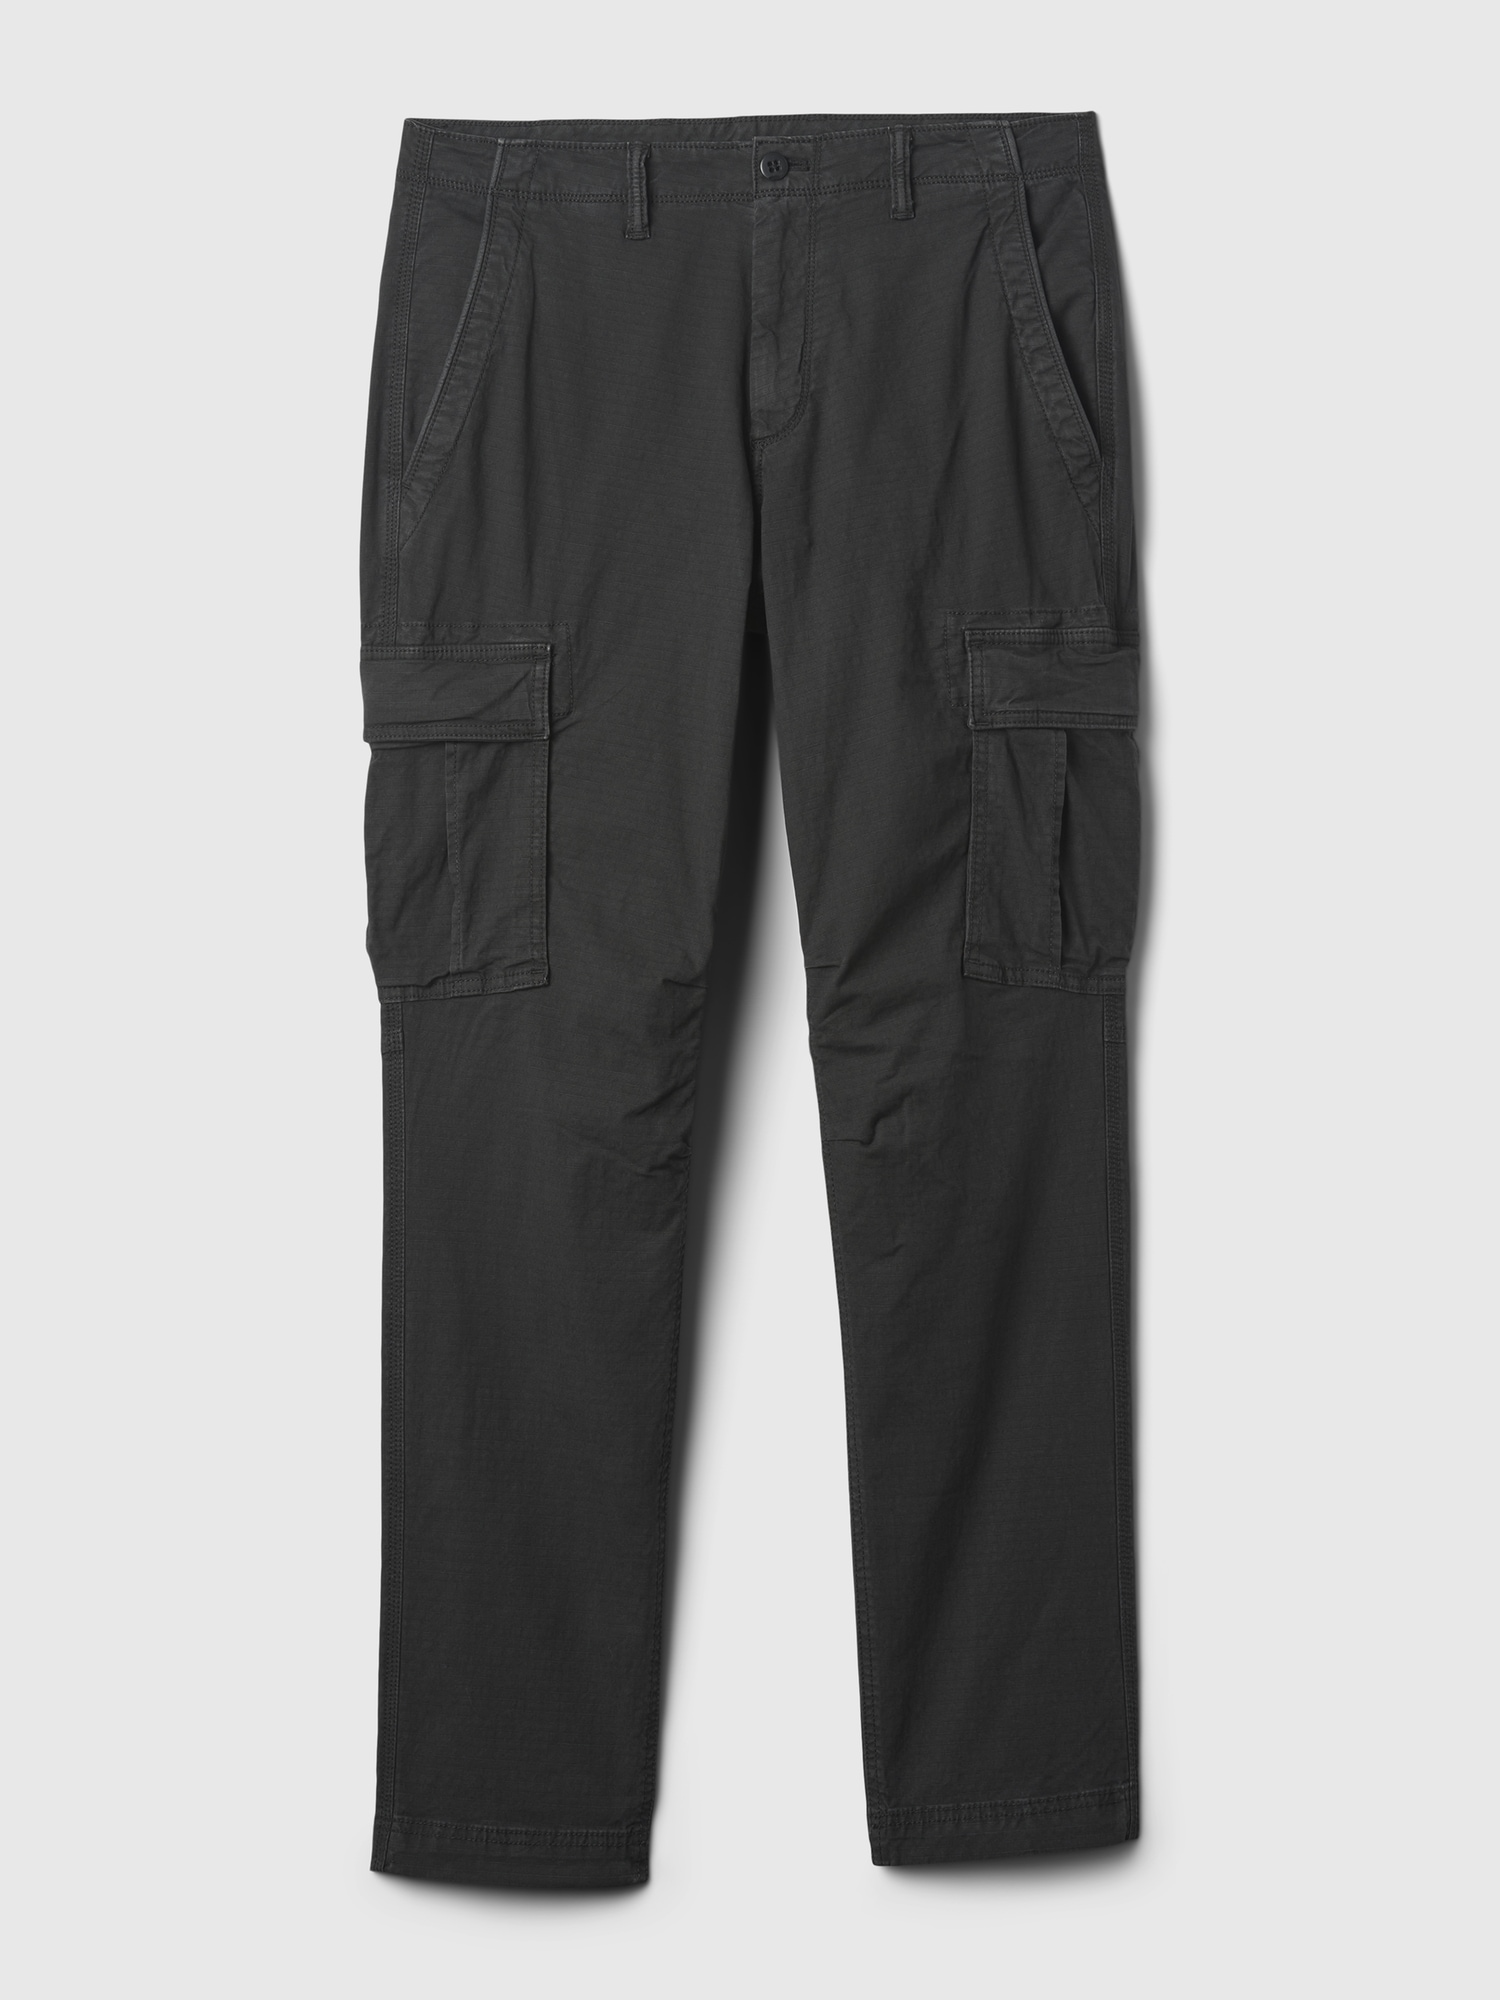 Men 6 Pockets Fleece Warm Cargo Pants Work Casual Winter Pants